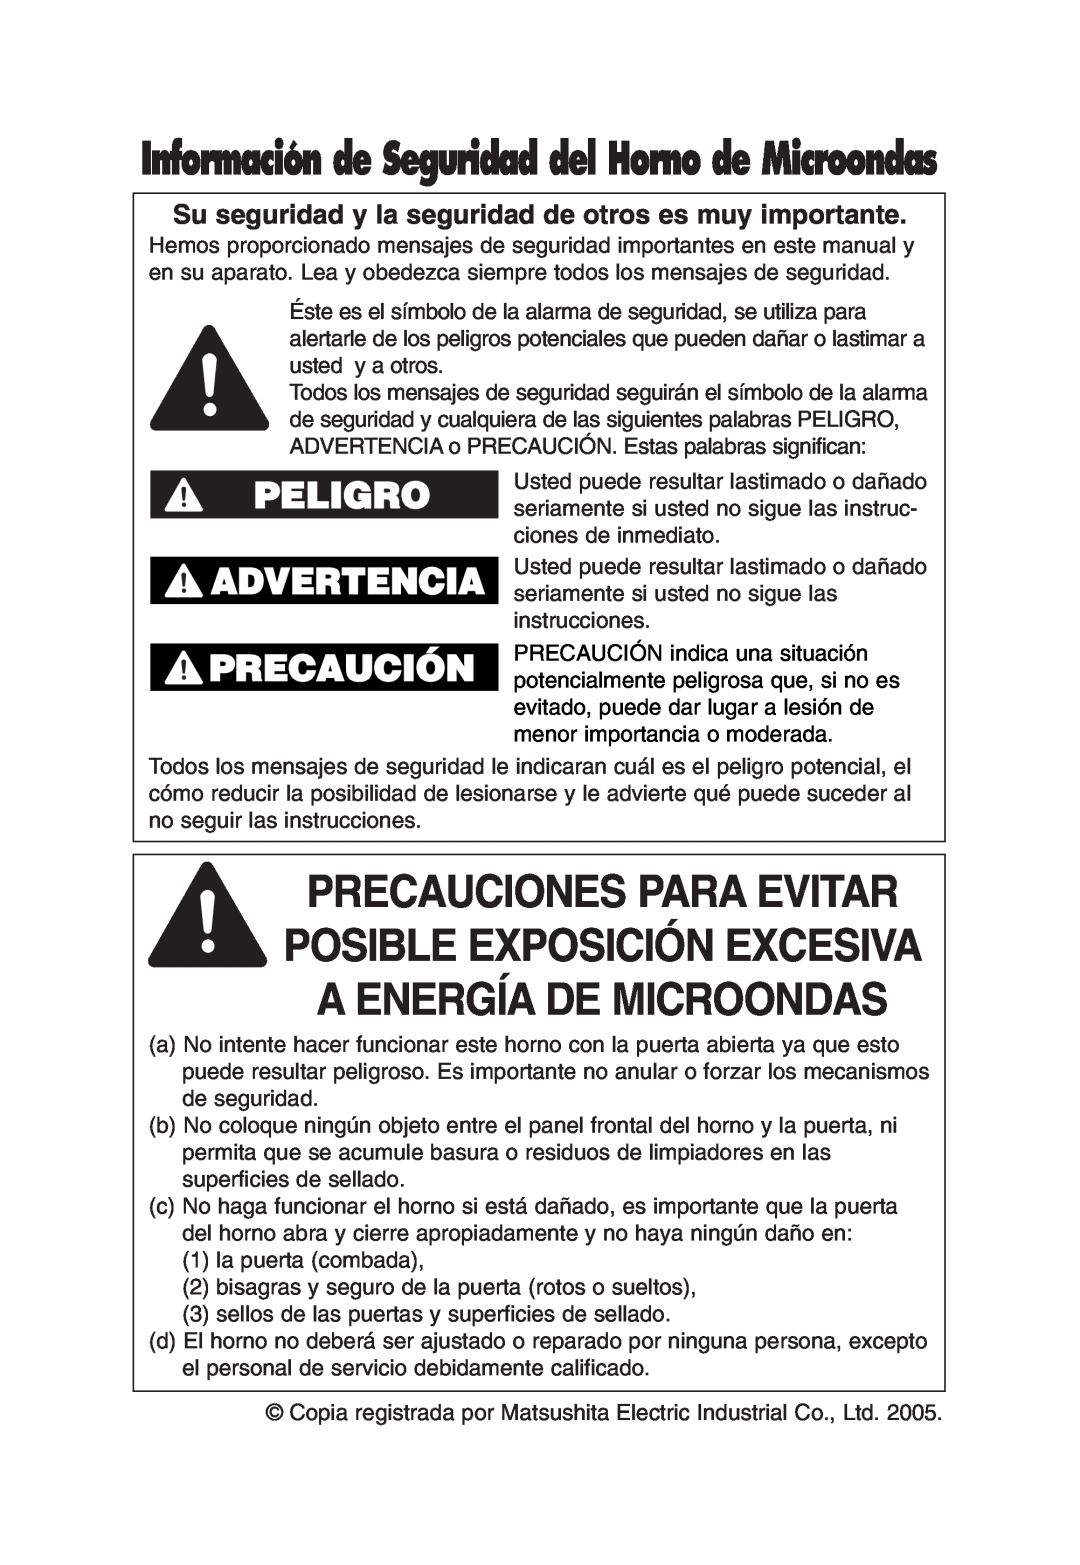 Panasonic NN-T685, NN-T675 operating instructions Peligro Advertencia, Información de Seguridad del Horno de Microondas 